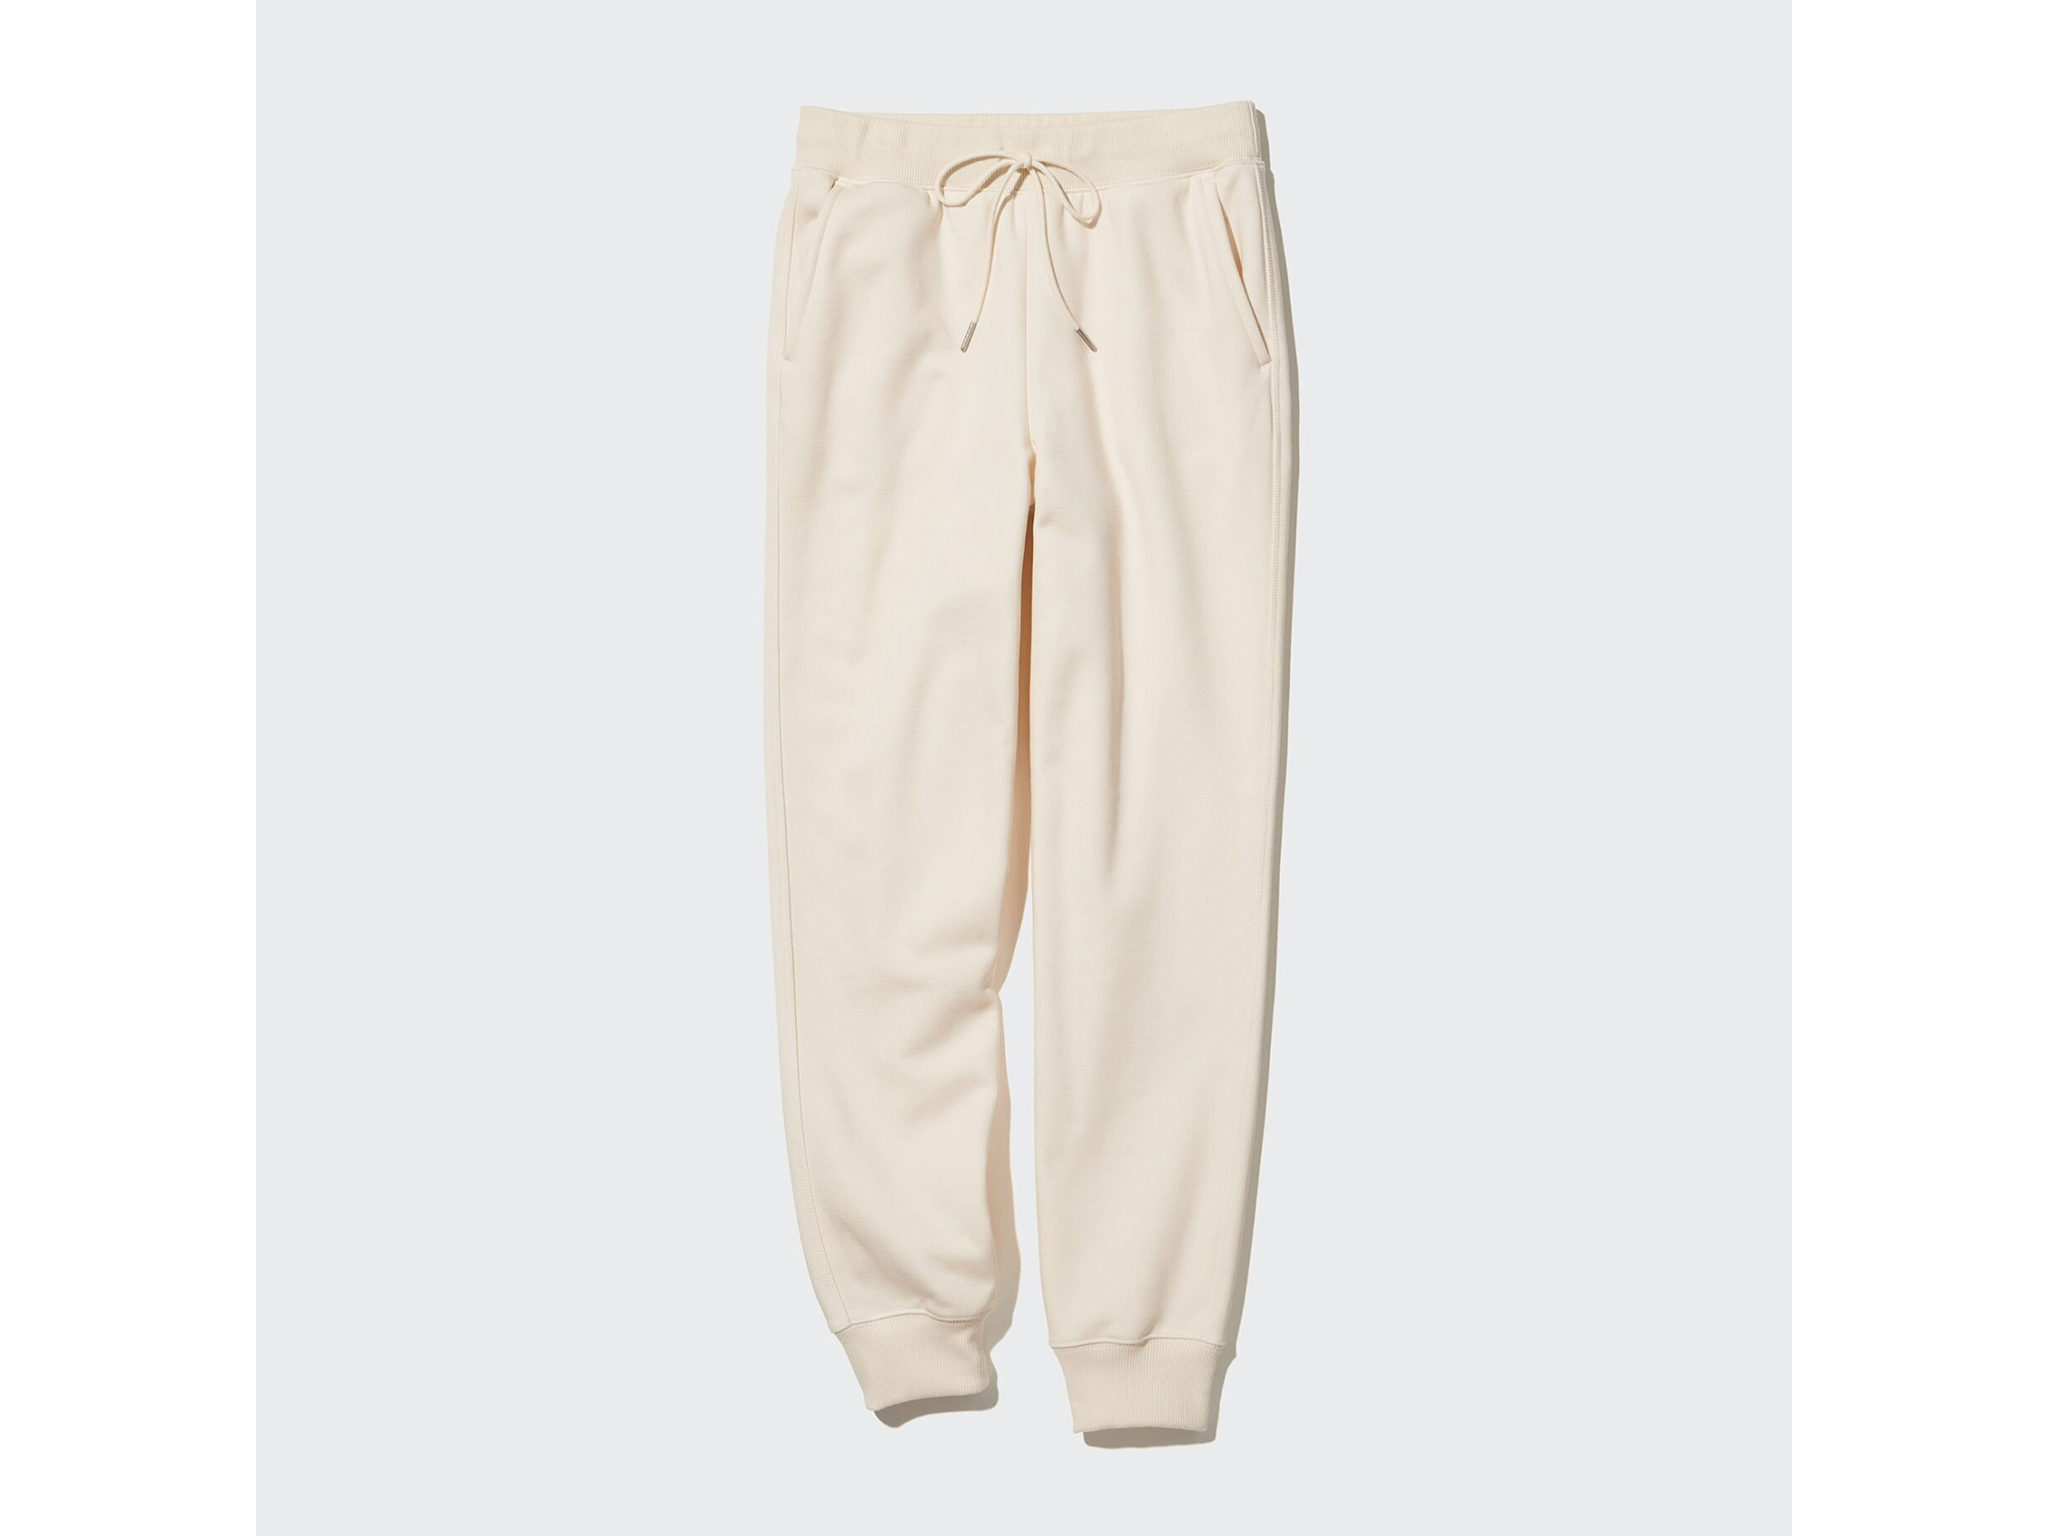 UNIQLO HEATTECH Warm Lined Pants | StyleHint